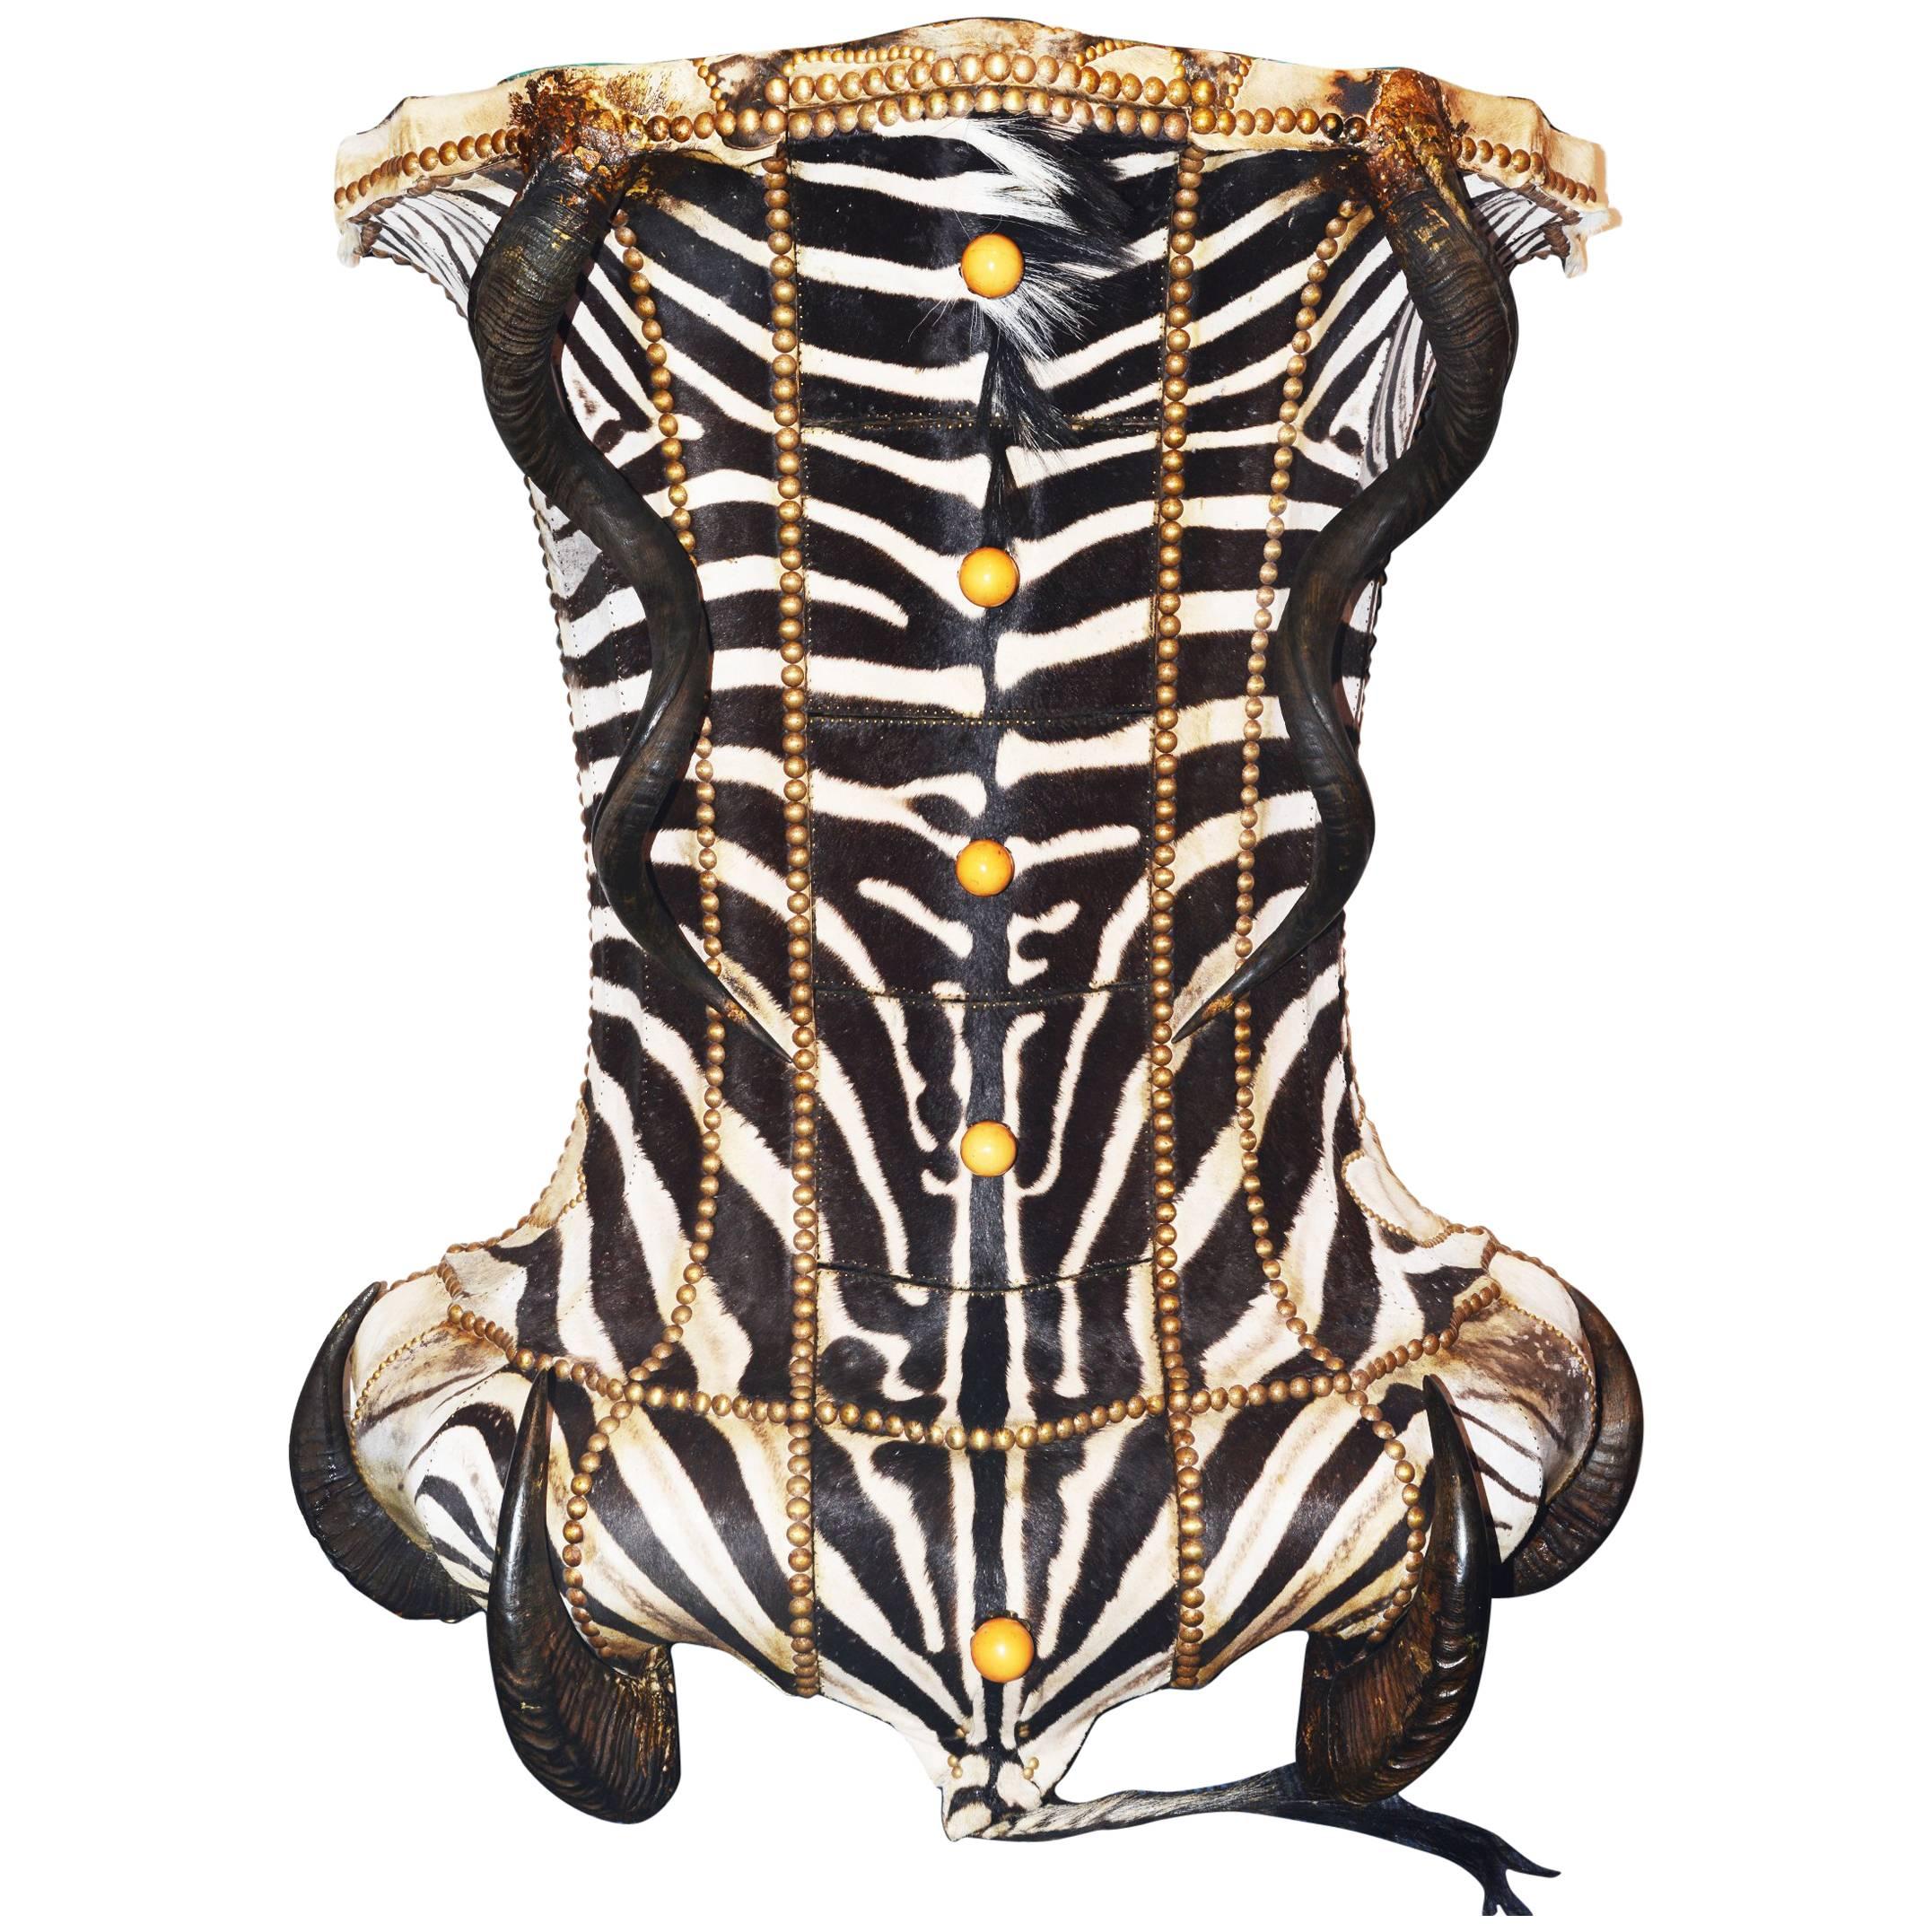 Zebra Head Chest of Drawers with Zebra Skin For Sale